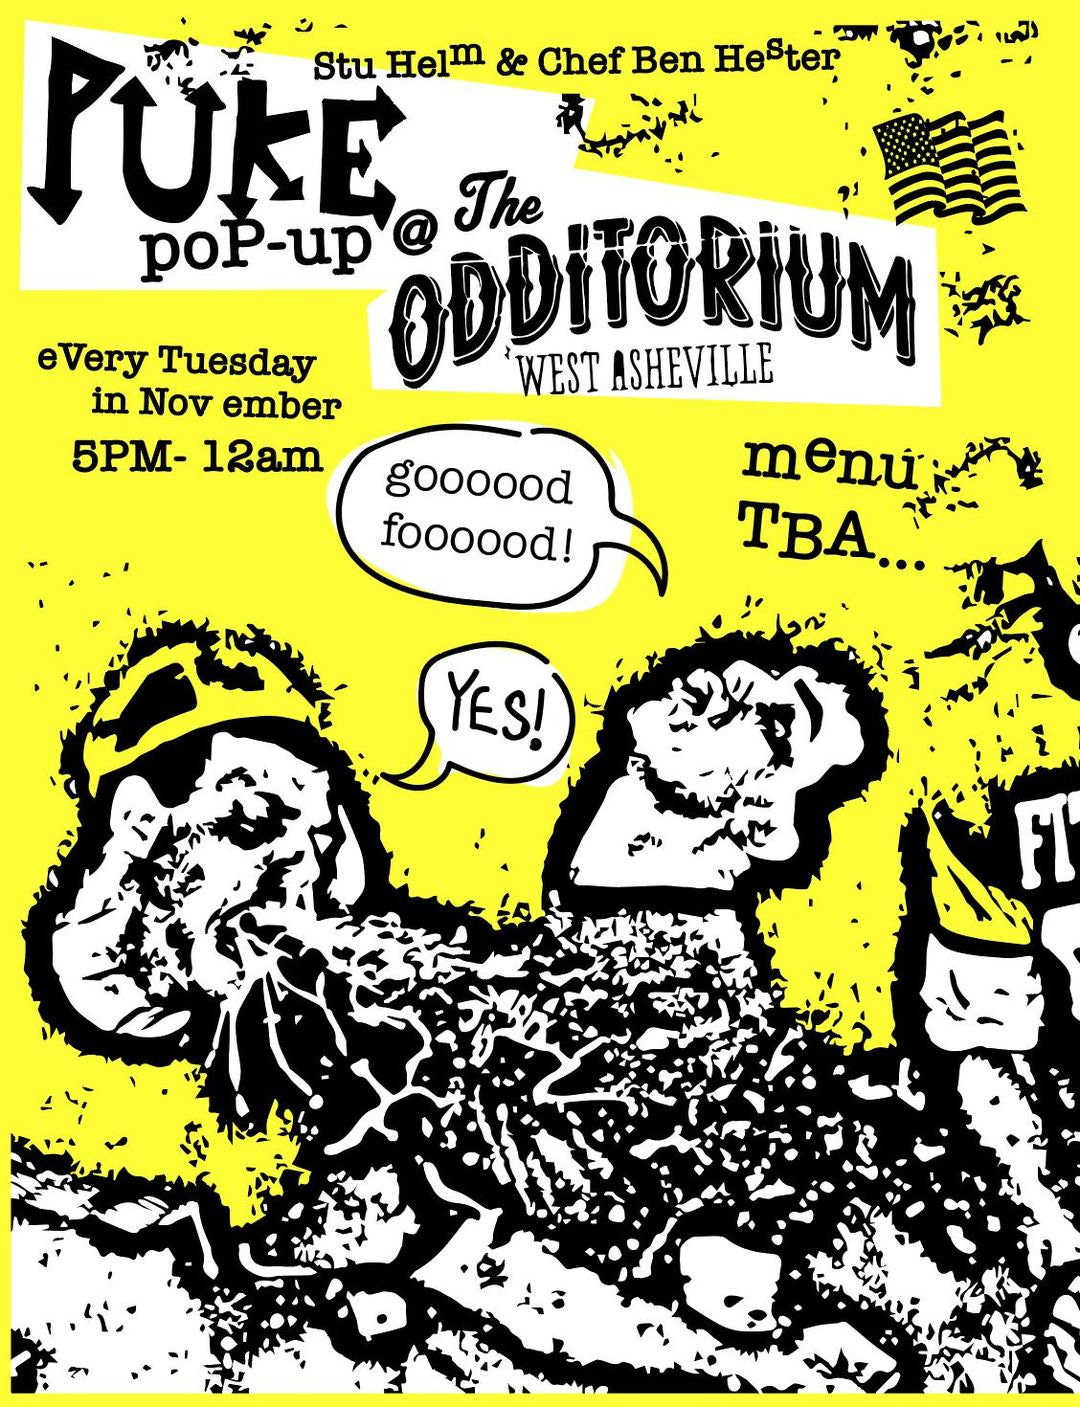 May be a cartoon of text that says 'PUKE Stu Helm & Chef Ben Heter The poP poP-up eVery Tuesday in Nov ember WEST ODDITORIUM ASHEVILLE 5PM- 12am menu TBA.. goooood foooood! YES! FT'